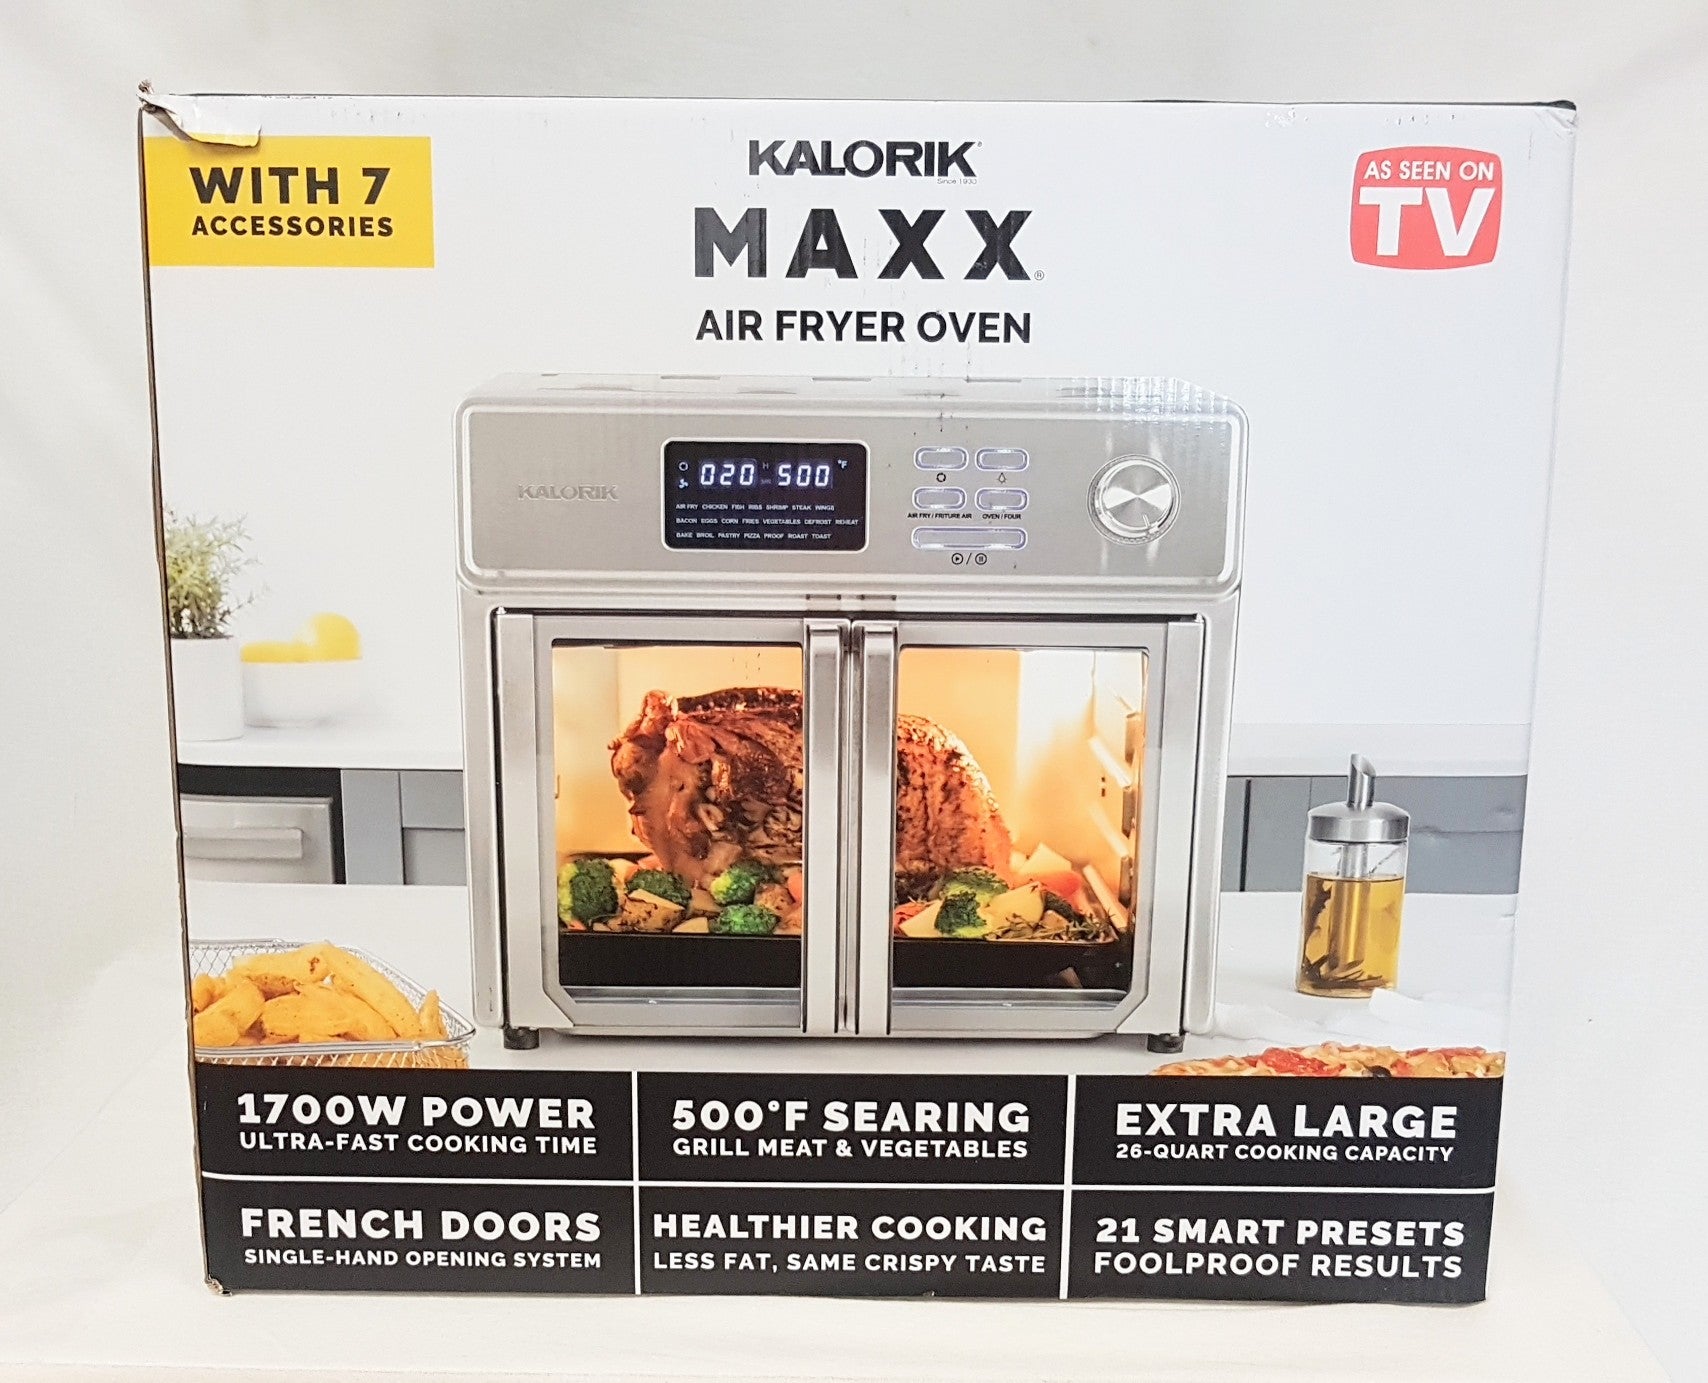 KALORIK MAXX Digital Air Fryer Oven with 7 Accessories, #AFO 47269 SS